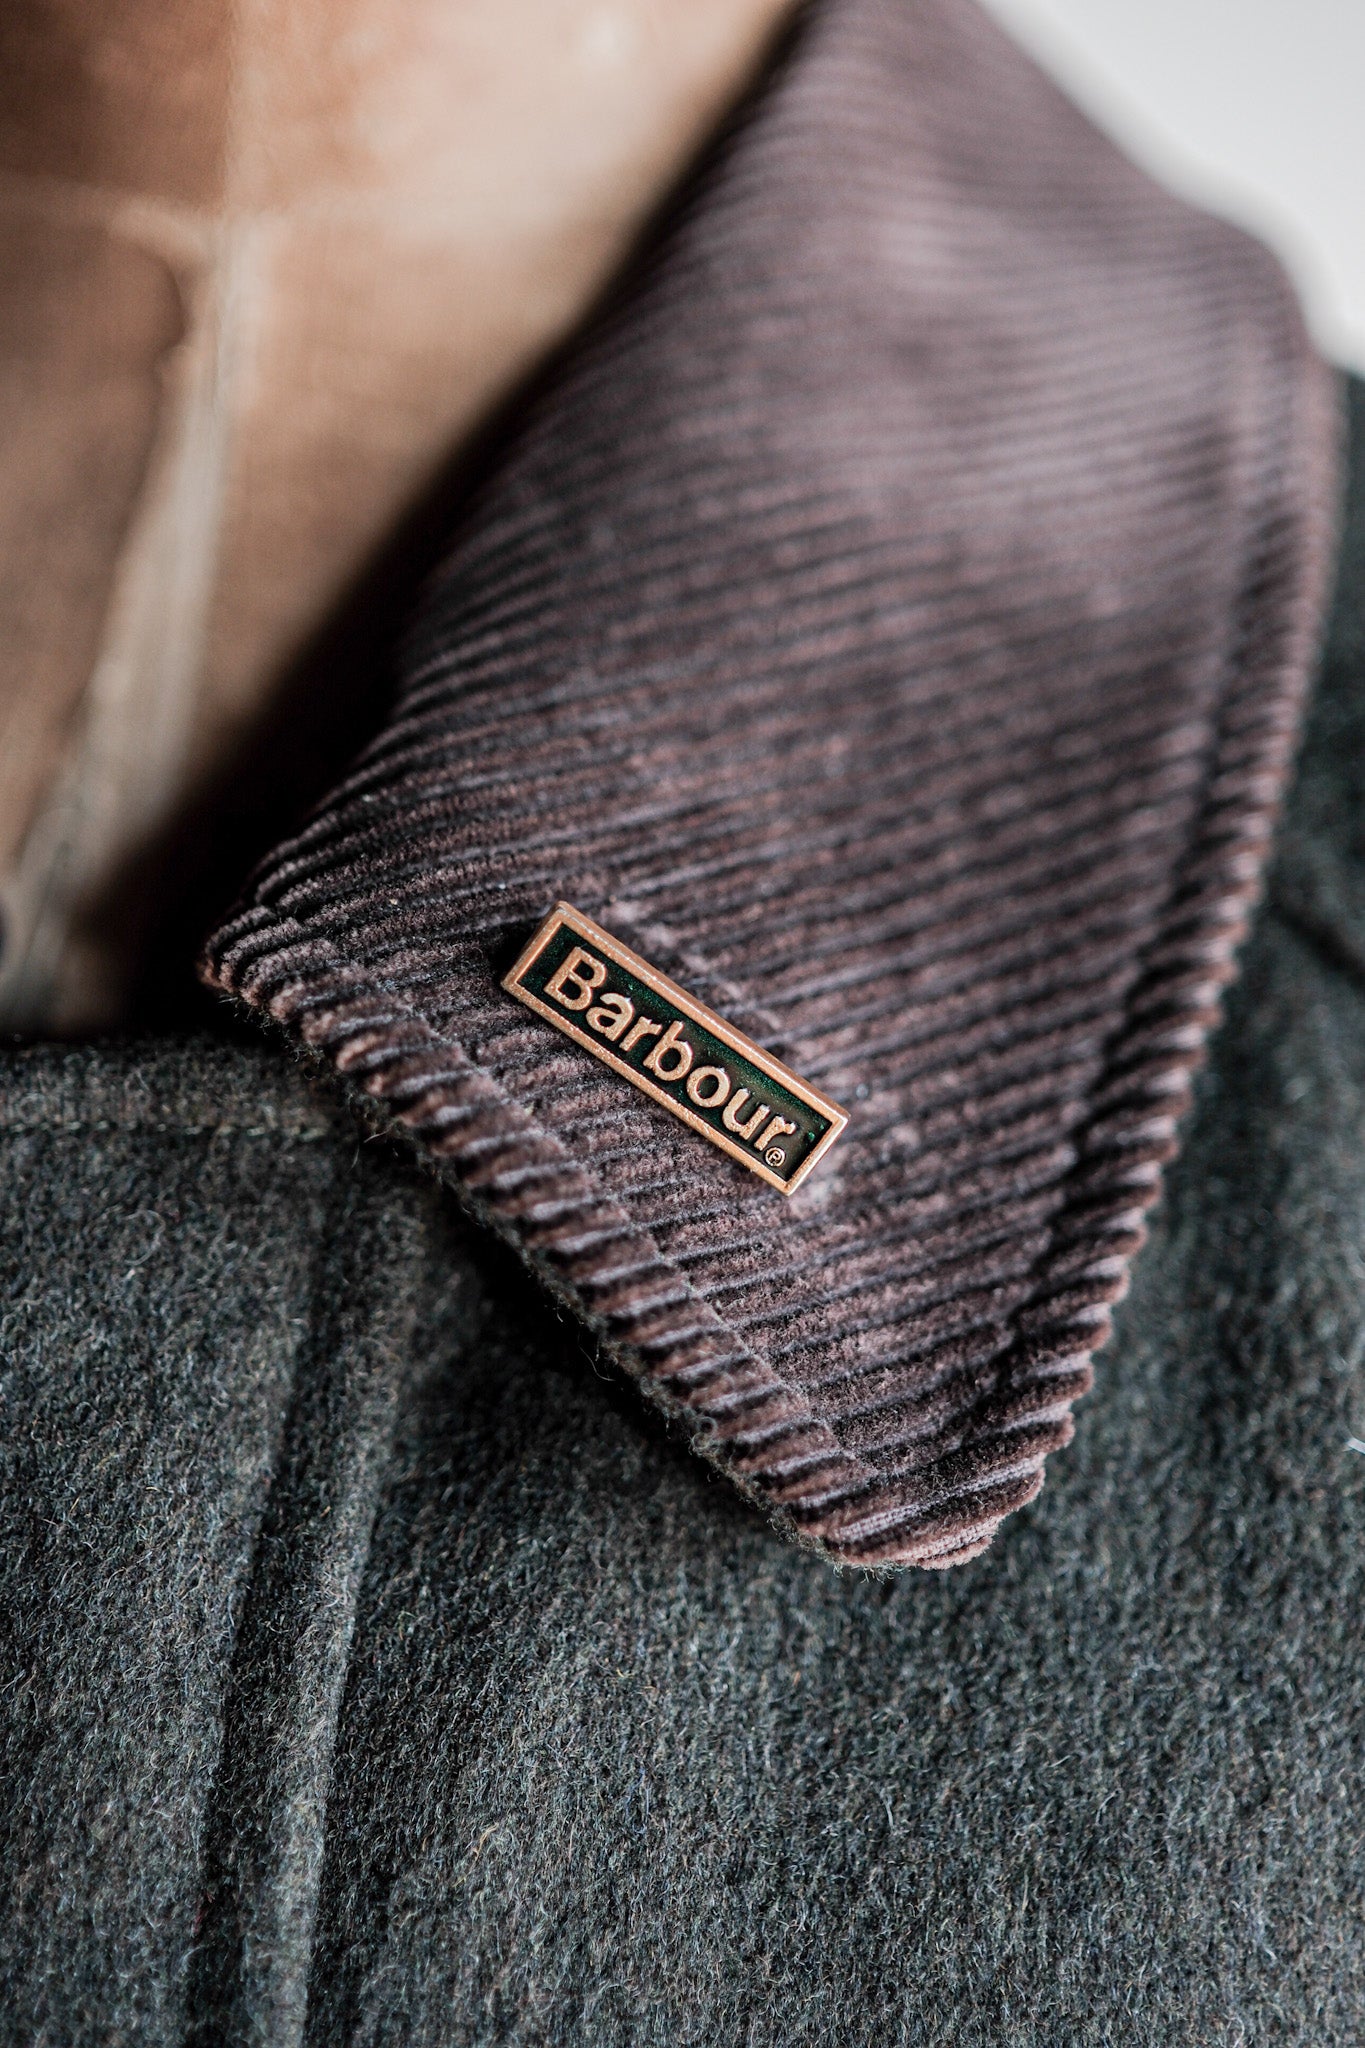 [~ 90's] Barbour vintage "Loden Jacket" 3 Crest Taille.42